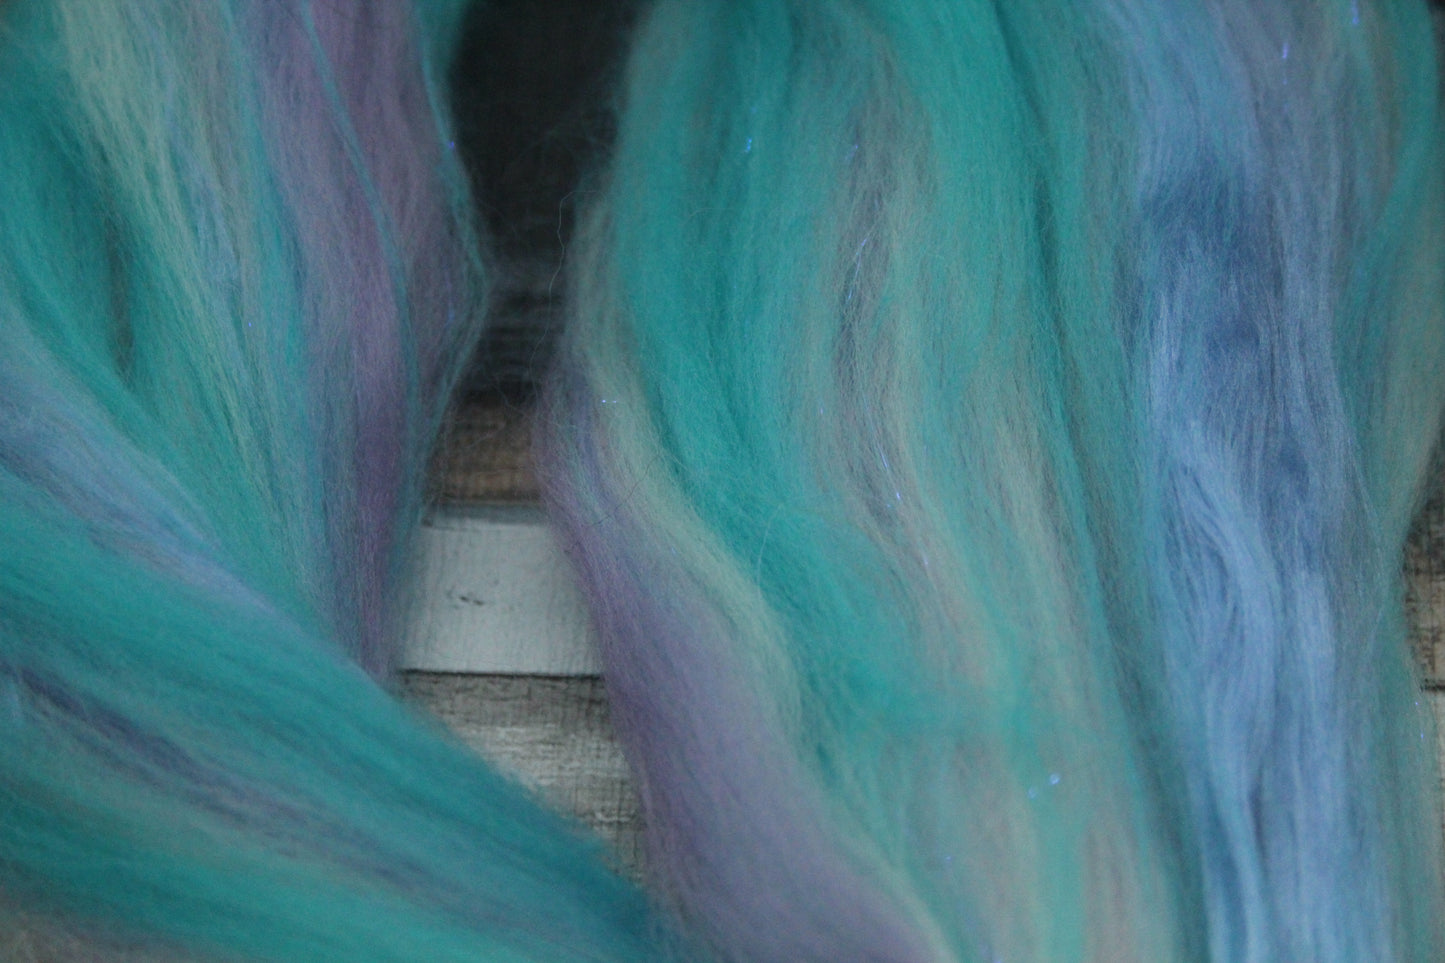 Merino Wool Blend - Purple Blue Pink - 17 grams / 0.5 oz  - Fibre for felting, weaving or spinning